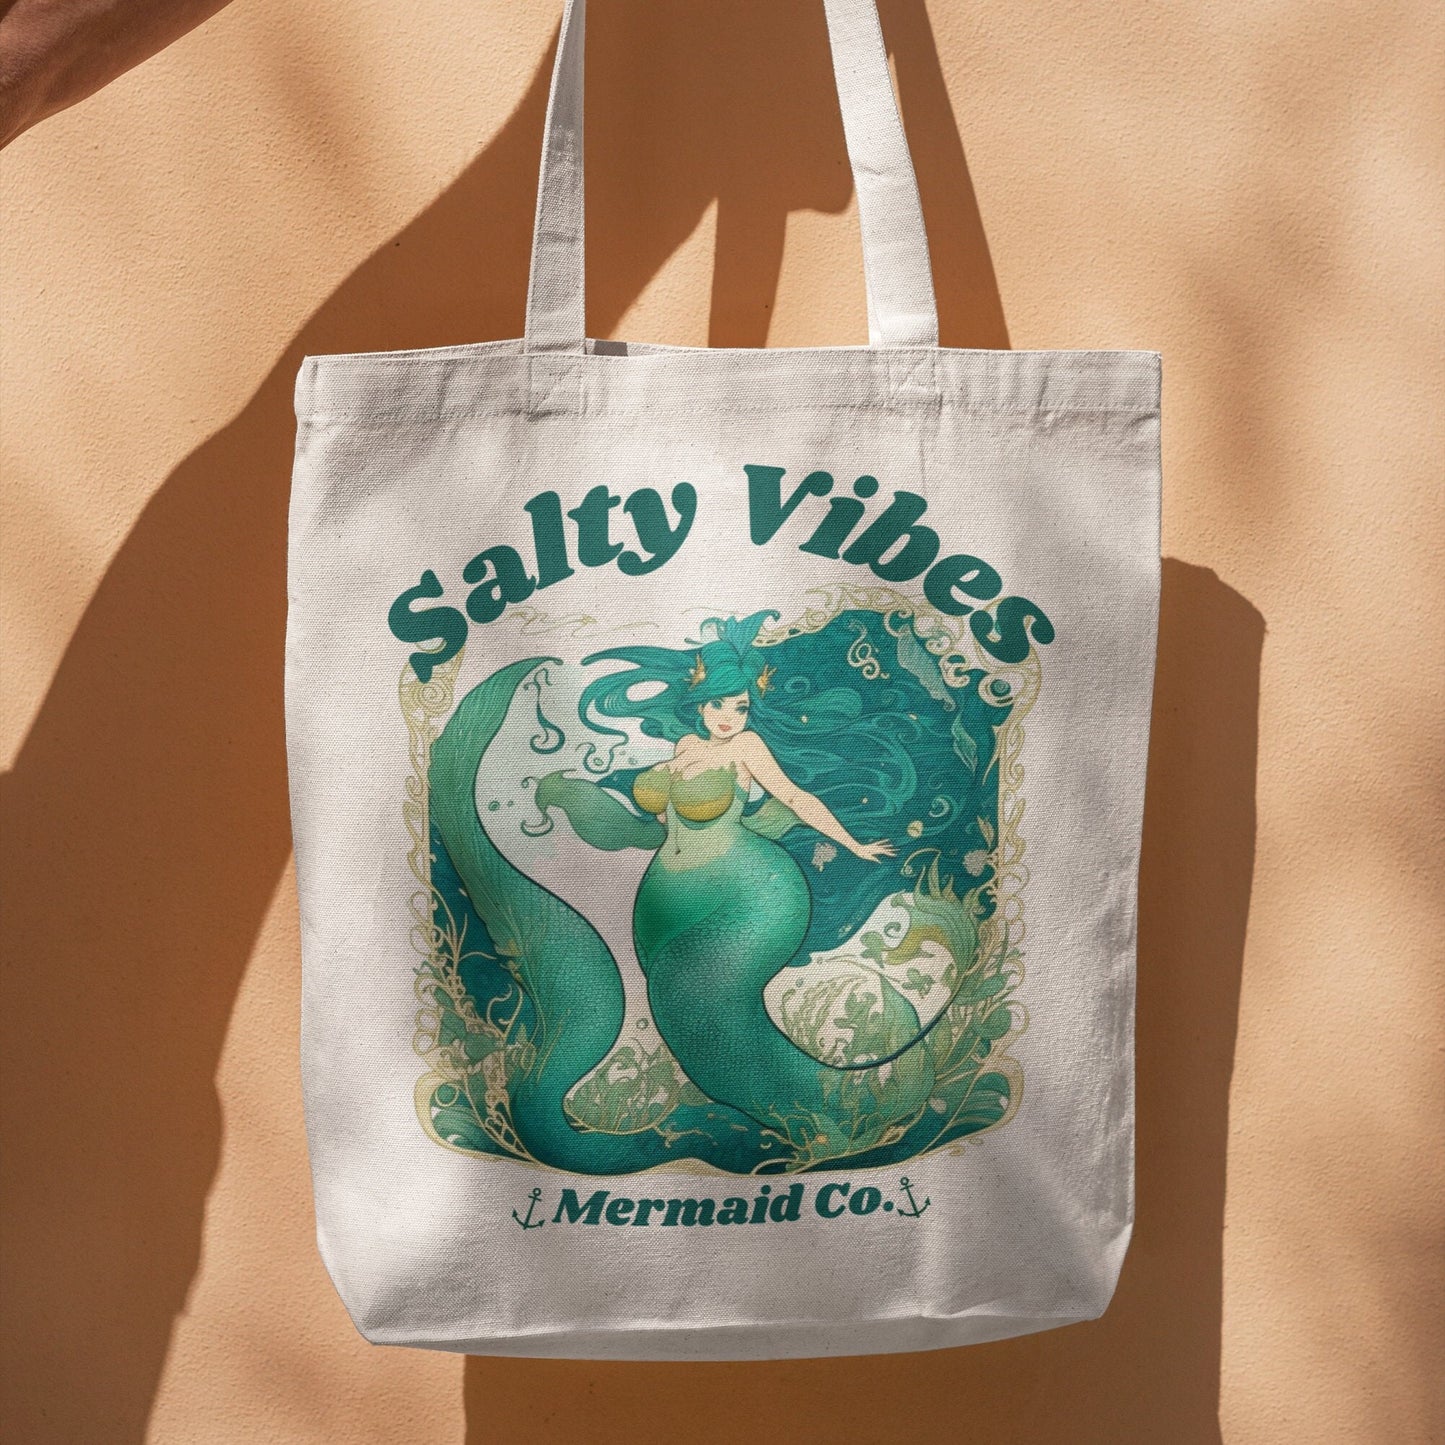 Mermaid Tote Summer Gift Beach Bag Cotton Tote Bag Mermaid Gift for Her Bridal Gift Bachelorette Travel Tote Salty Vibes Mermaid Party Bag 3